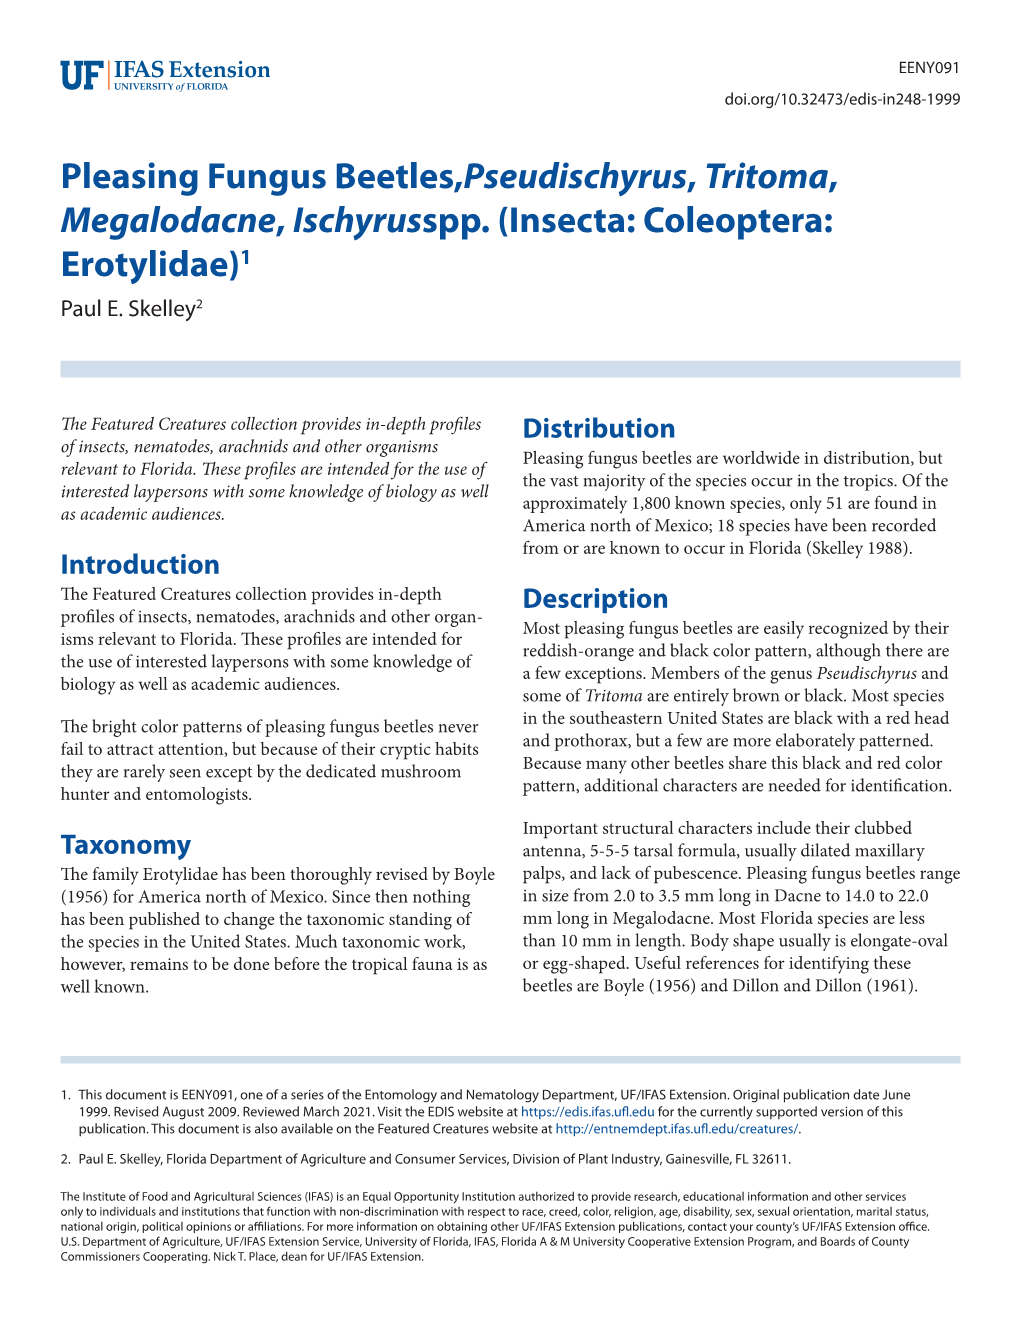 Pleasing Fungus Beetles,Pseudischyrus, Tritoma, Megalodacne, Ischyrusspp